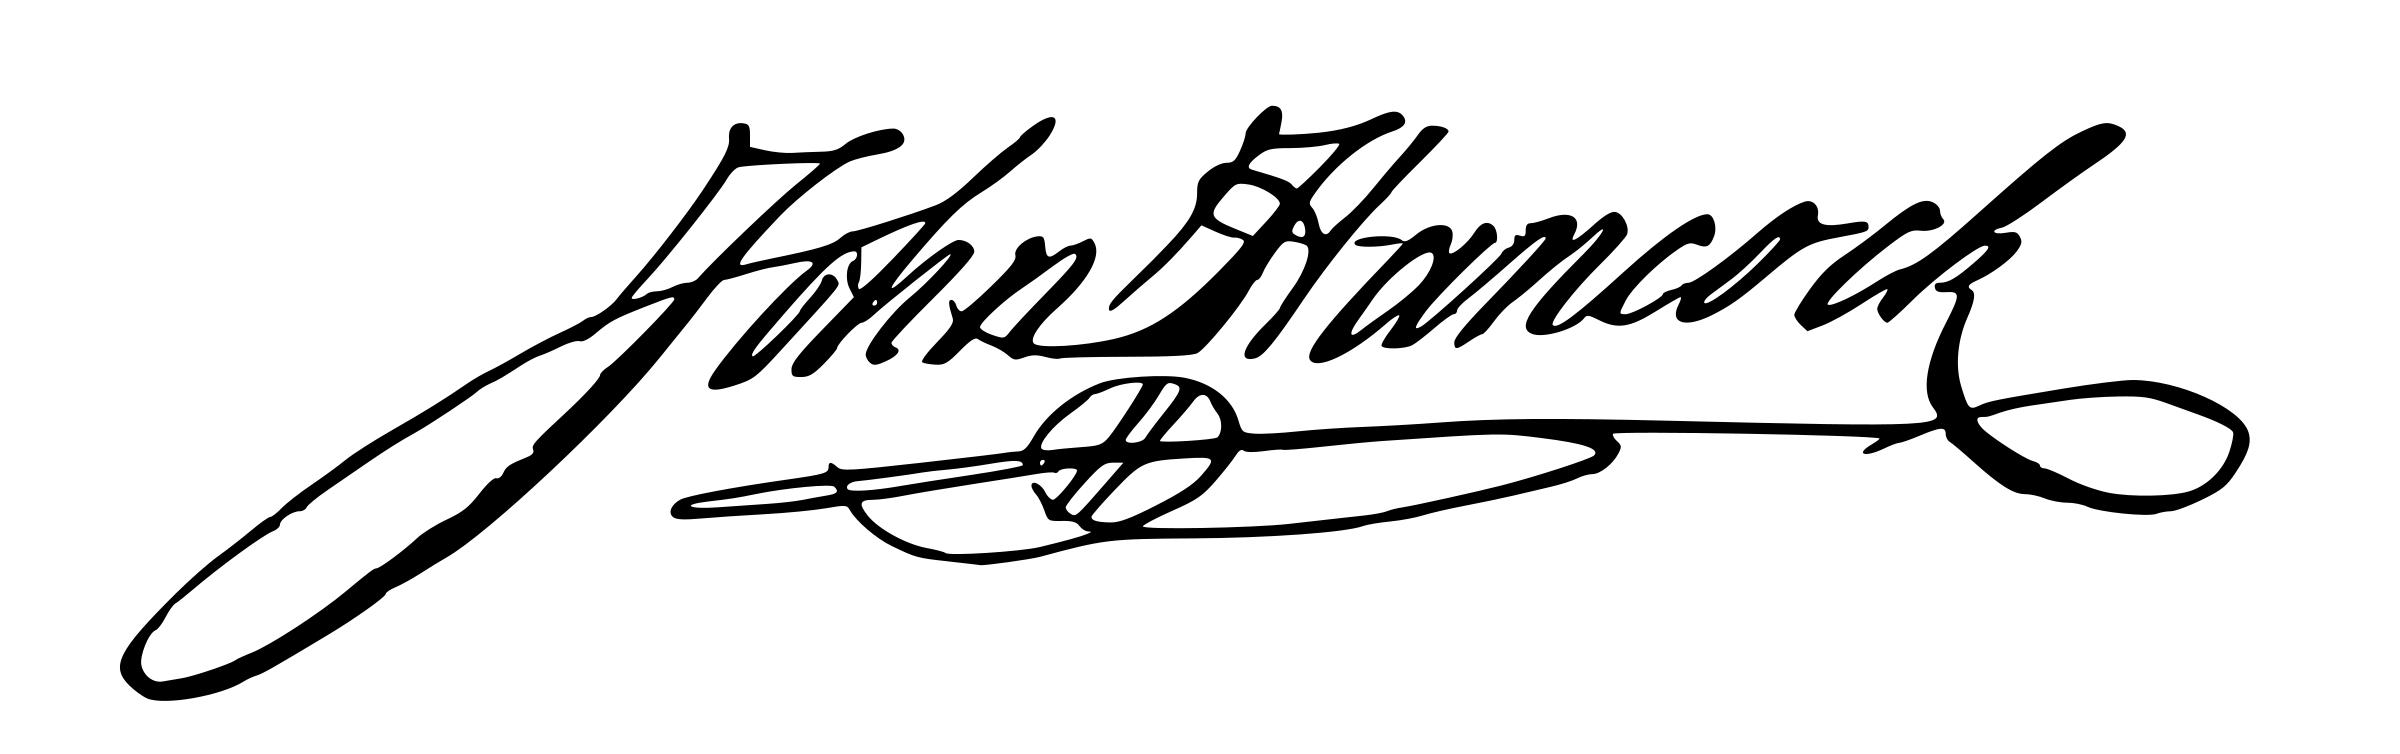 John Hancock Signature png